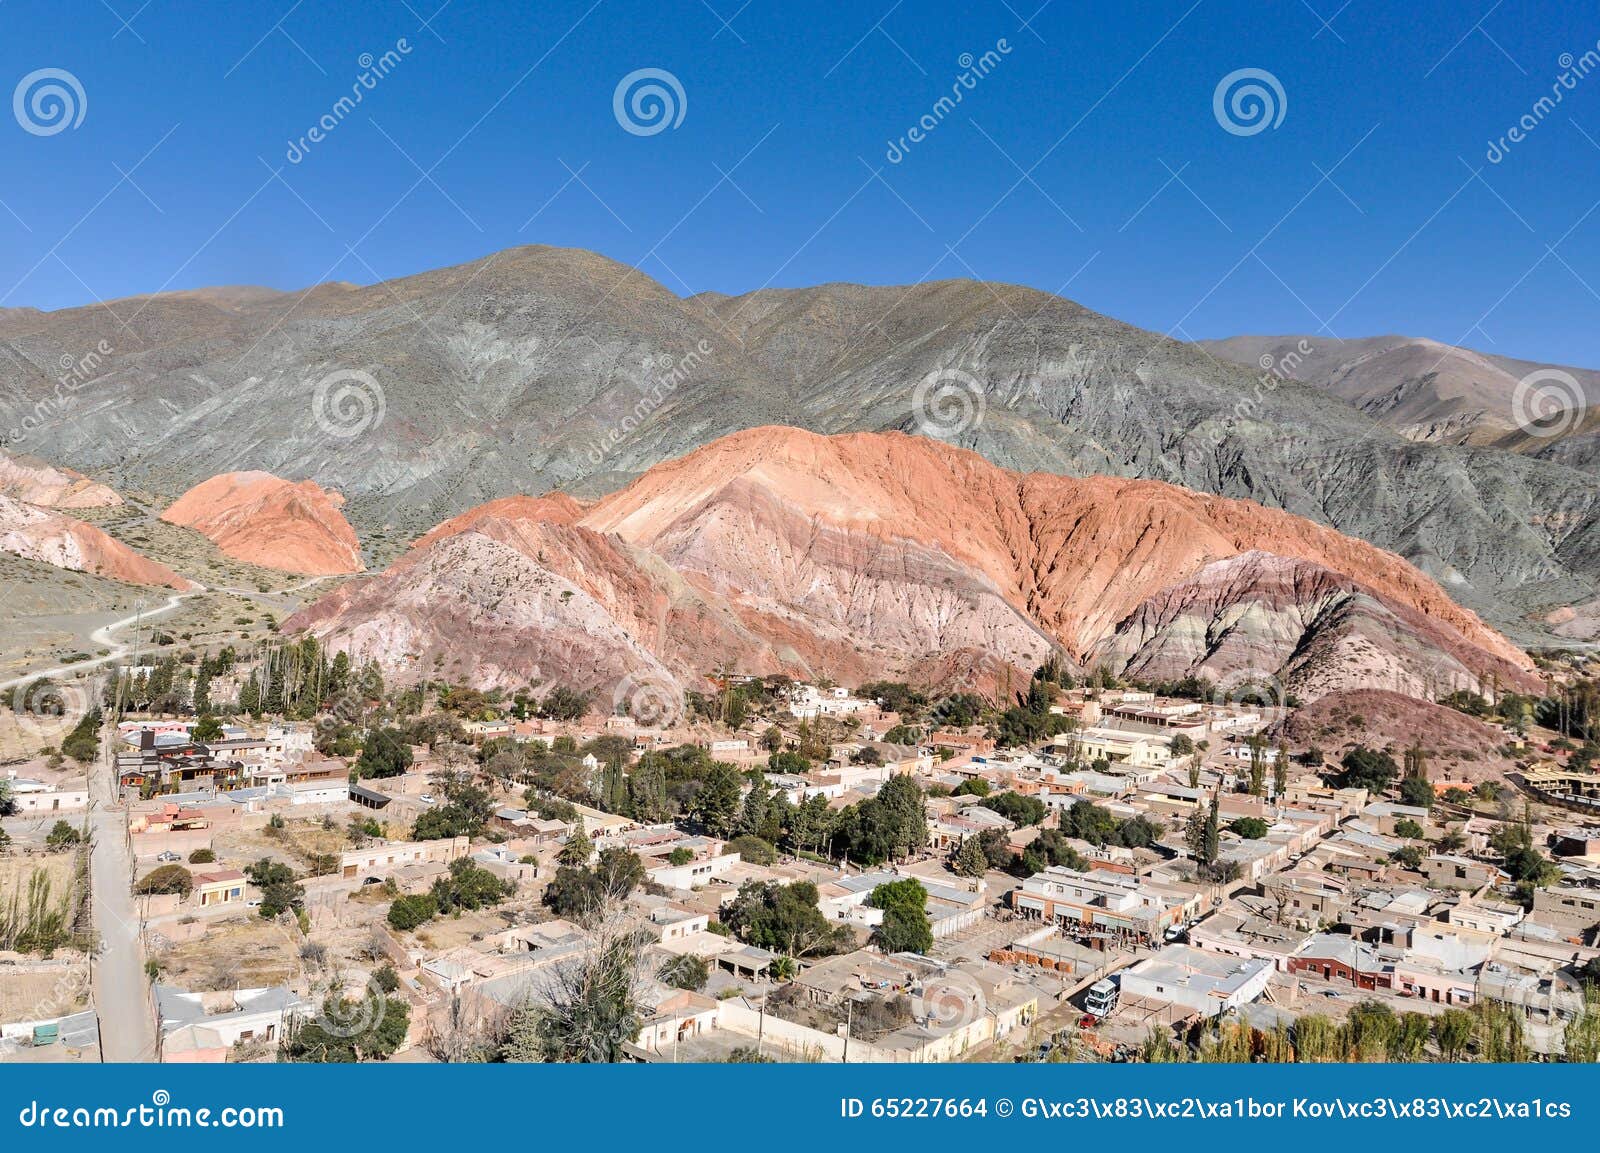 distant view of cerro de los siete colores, purnamarca, argentina